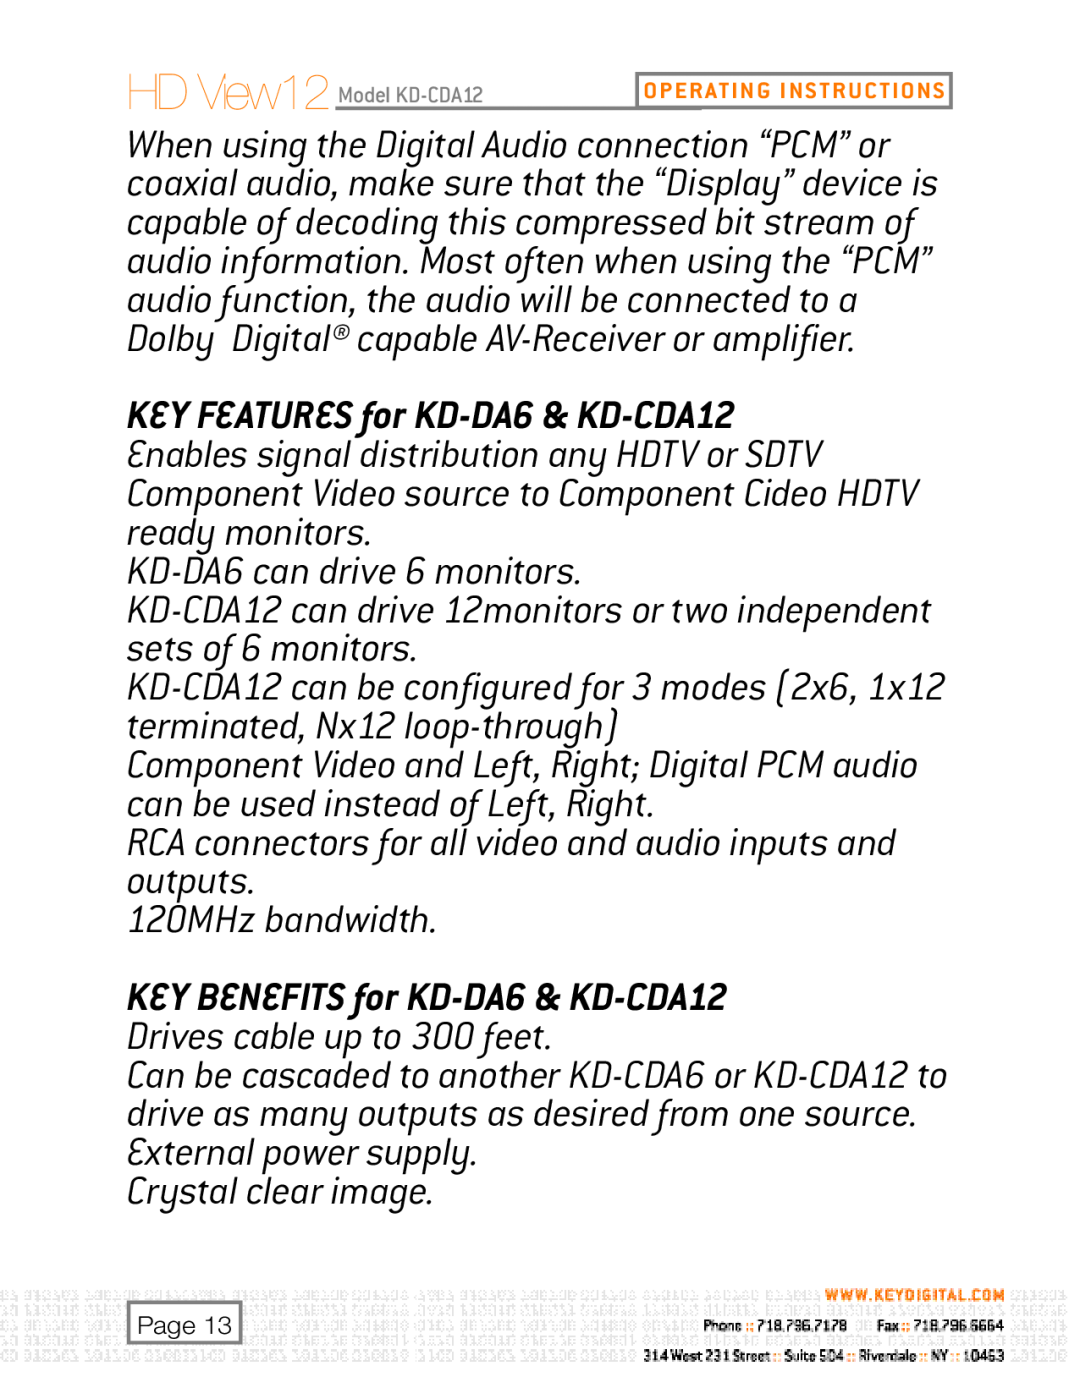 Key Digital user manual KEY BENEFITS for KD-DA6& KD-CDA12 